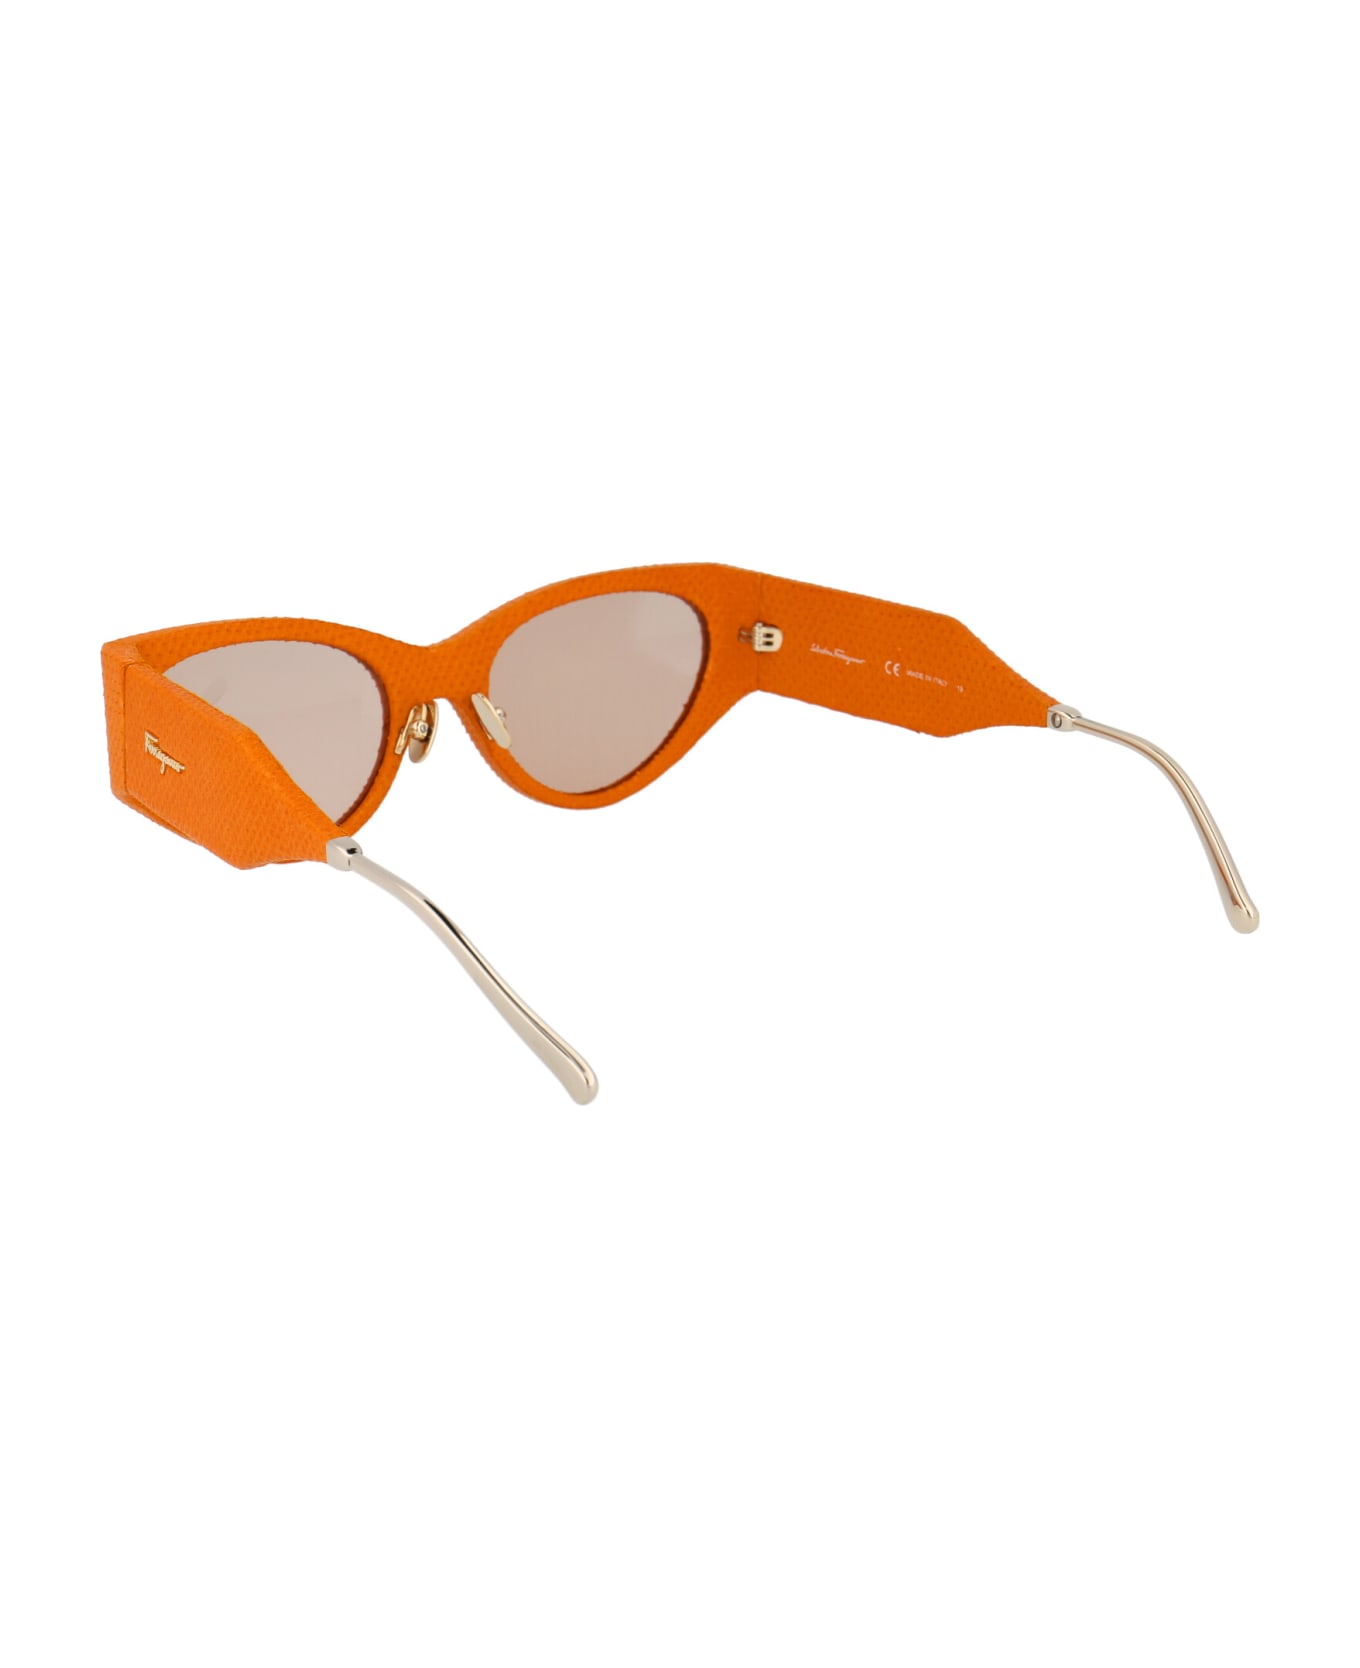 Salvatore Ferragamo Eyewear Sf950sl Sunglasses - 712 GOLDEN KARUNG